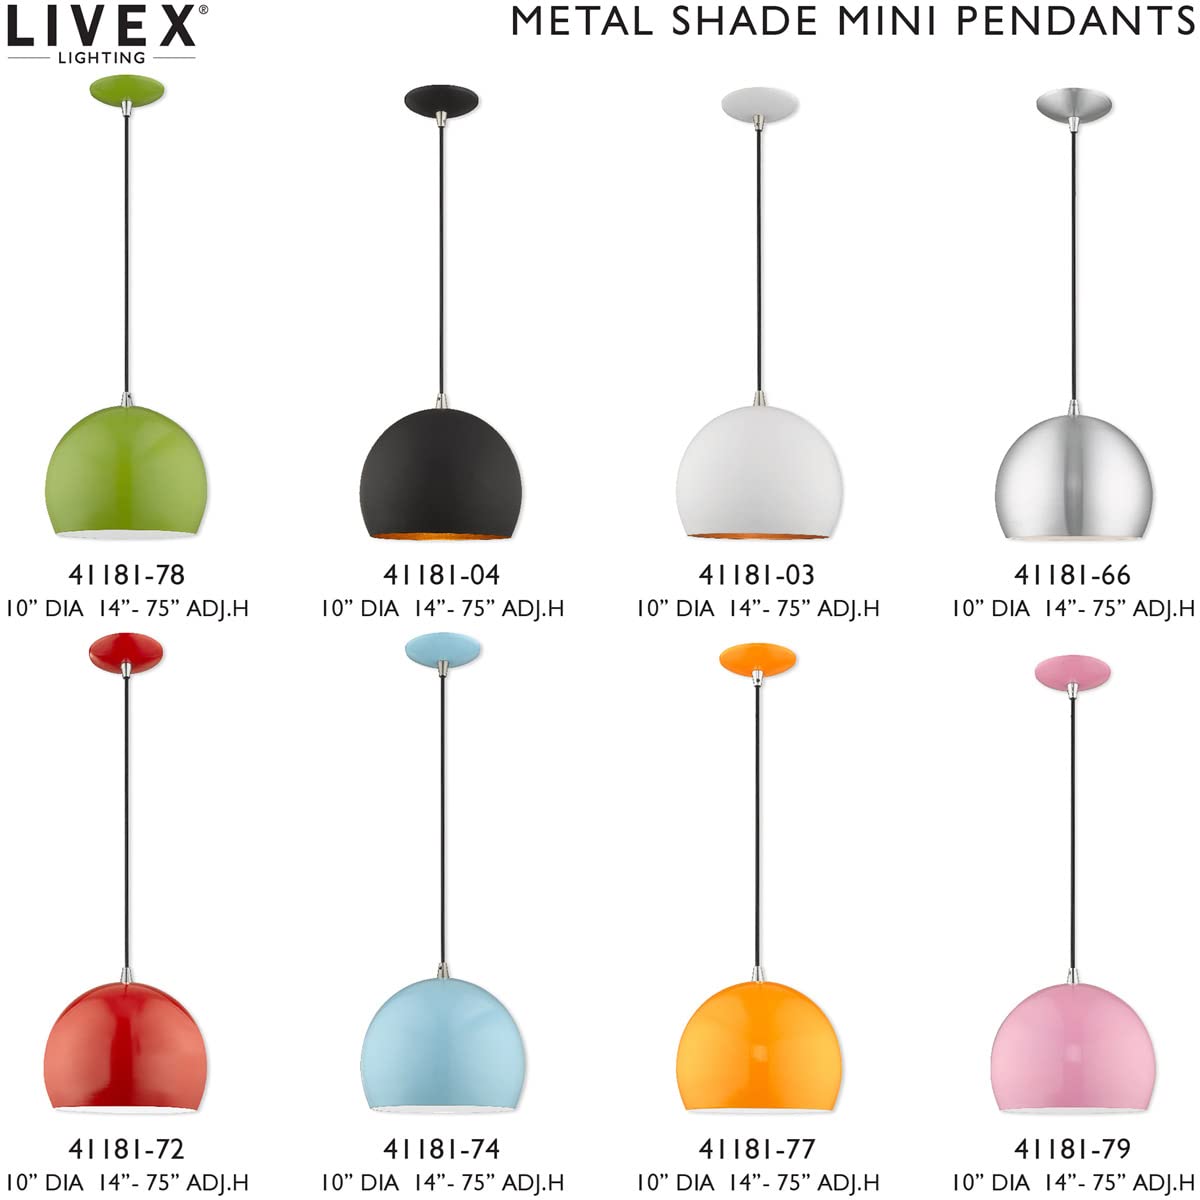 Livex Lighting 41181-77 Metal Shade - 10" One Light Mini Pendant, Shiny Orange Finish with Shiny Orange Metal/Shiny White Shade